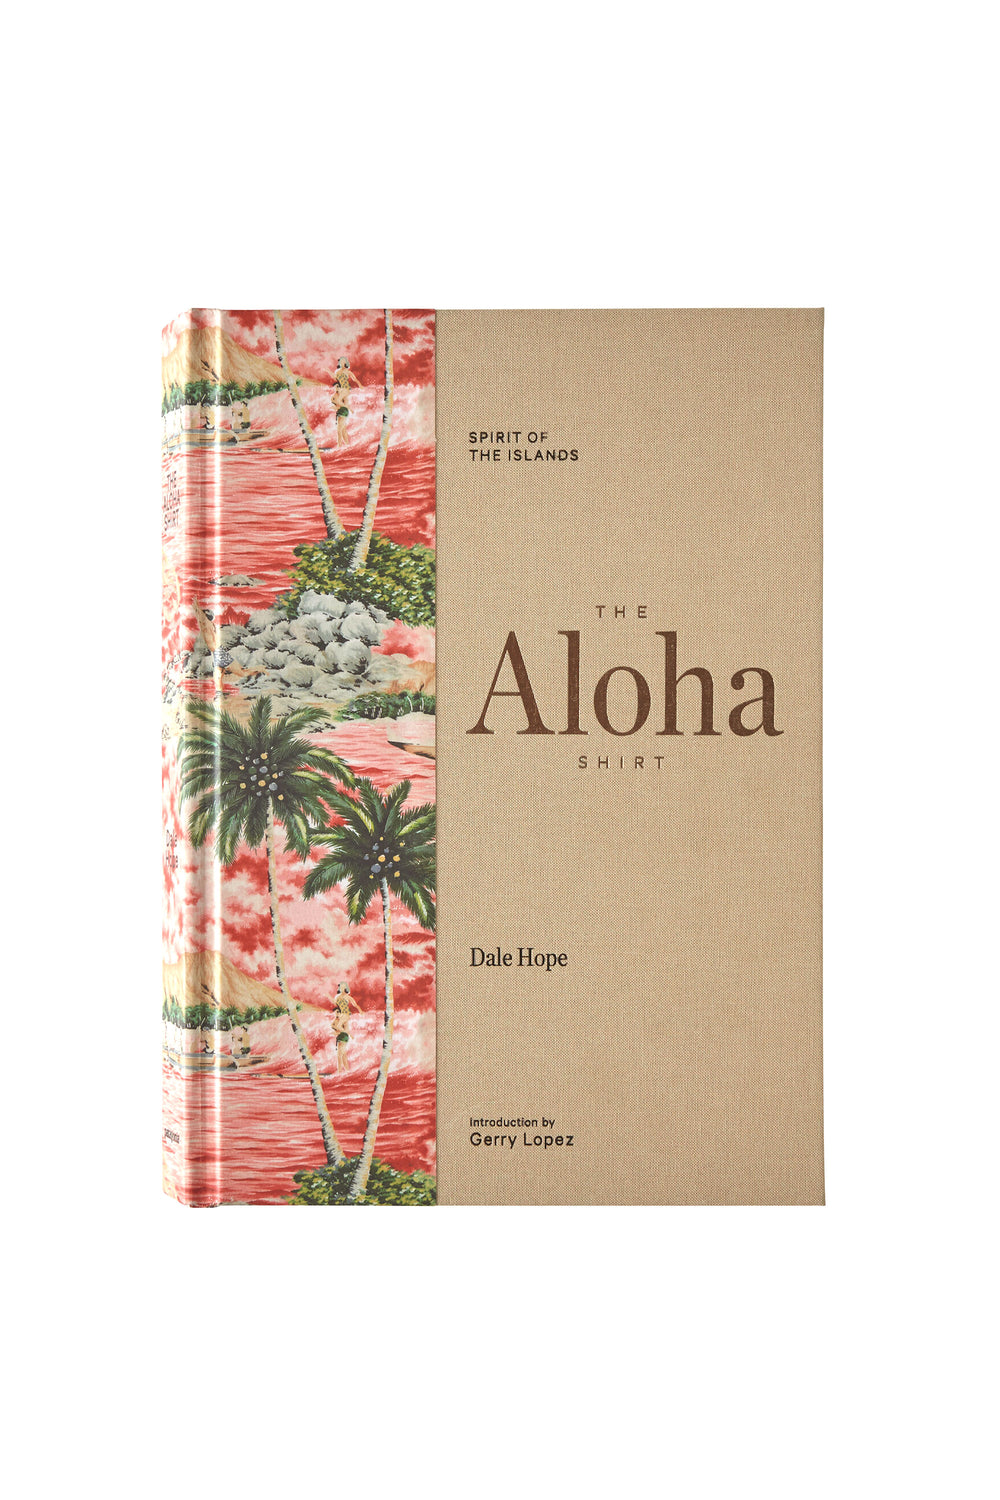 Pukas-surf-shop-book-aloha-shirt